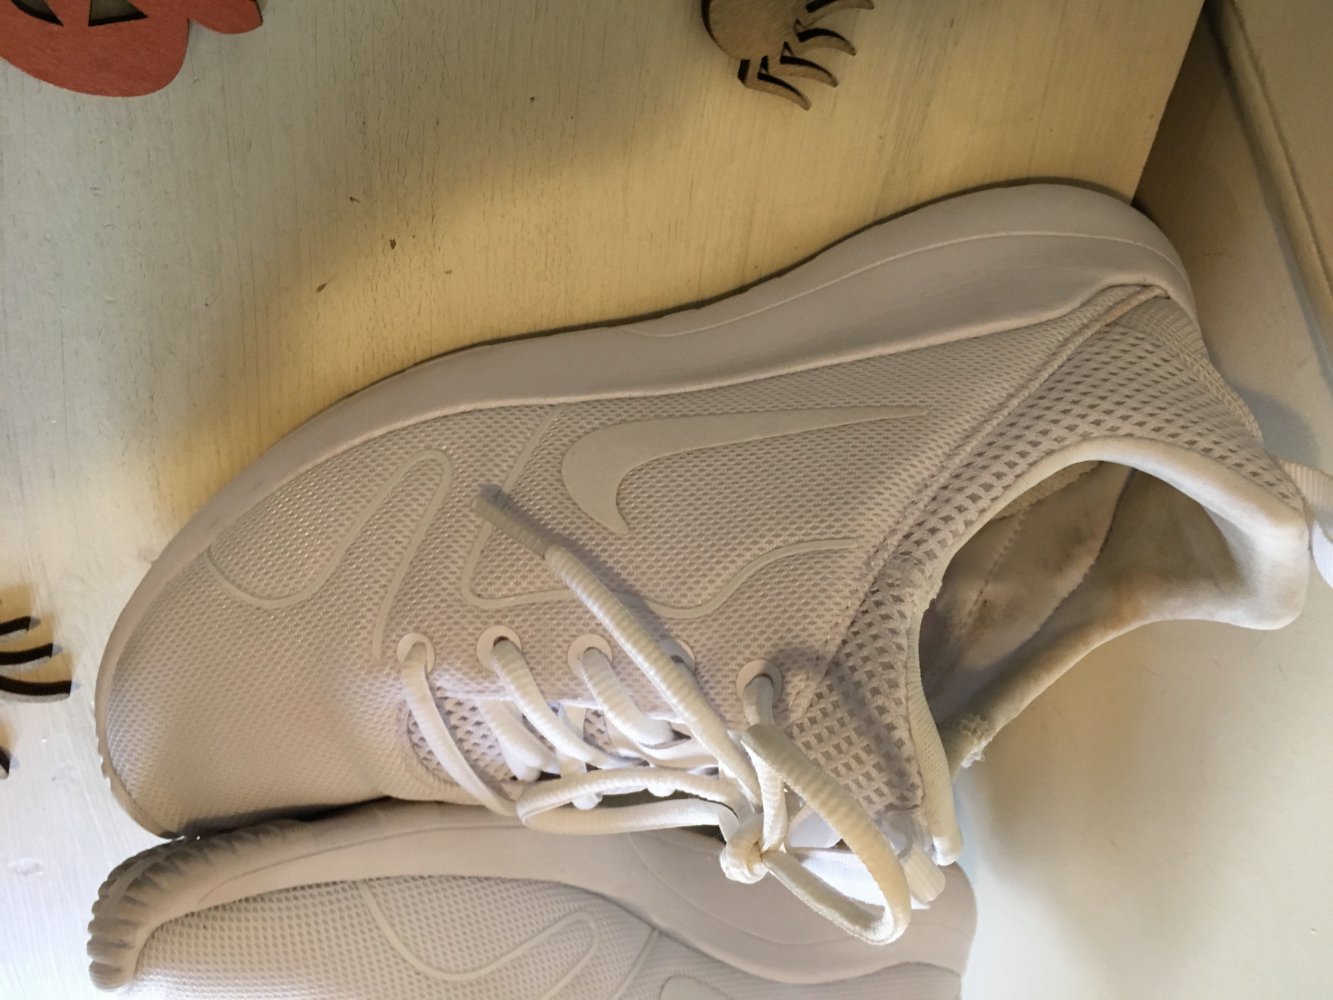 Nike Sport Schuhe weiß 